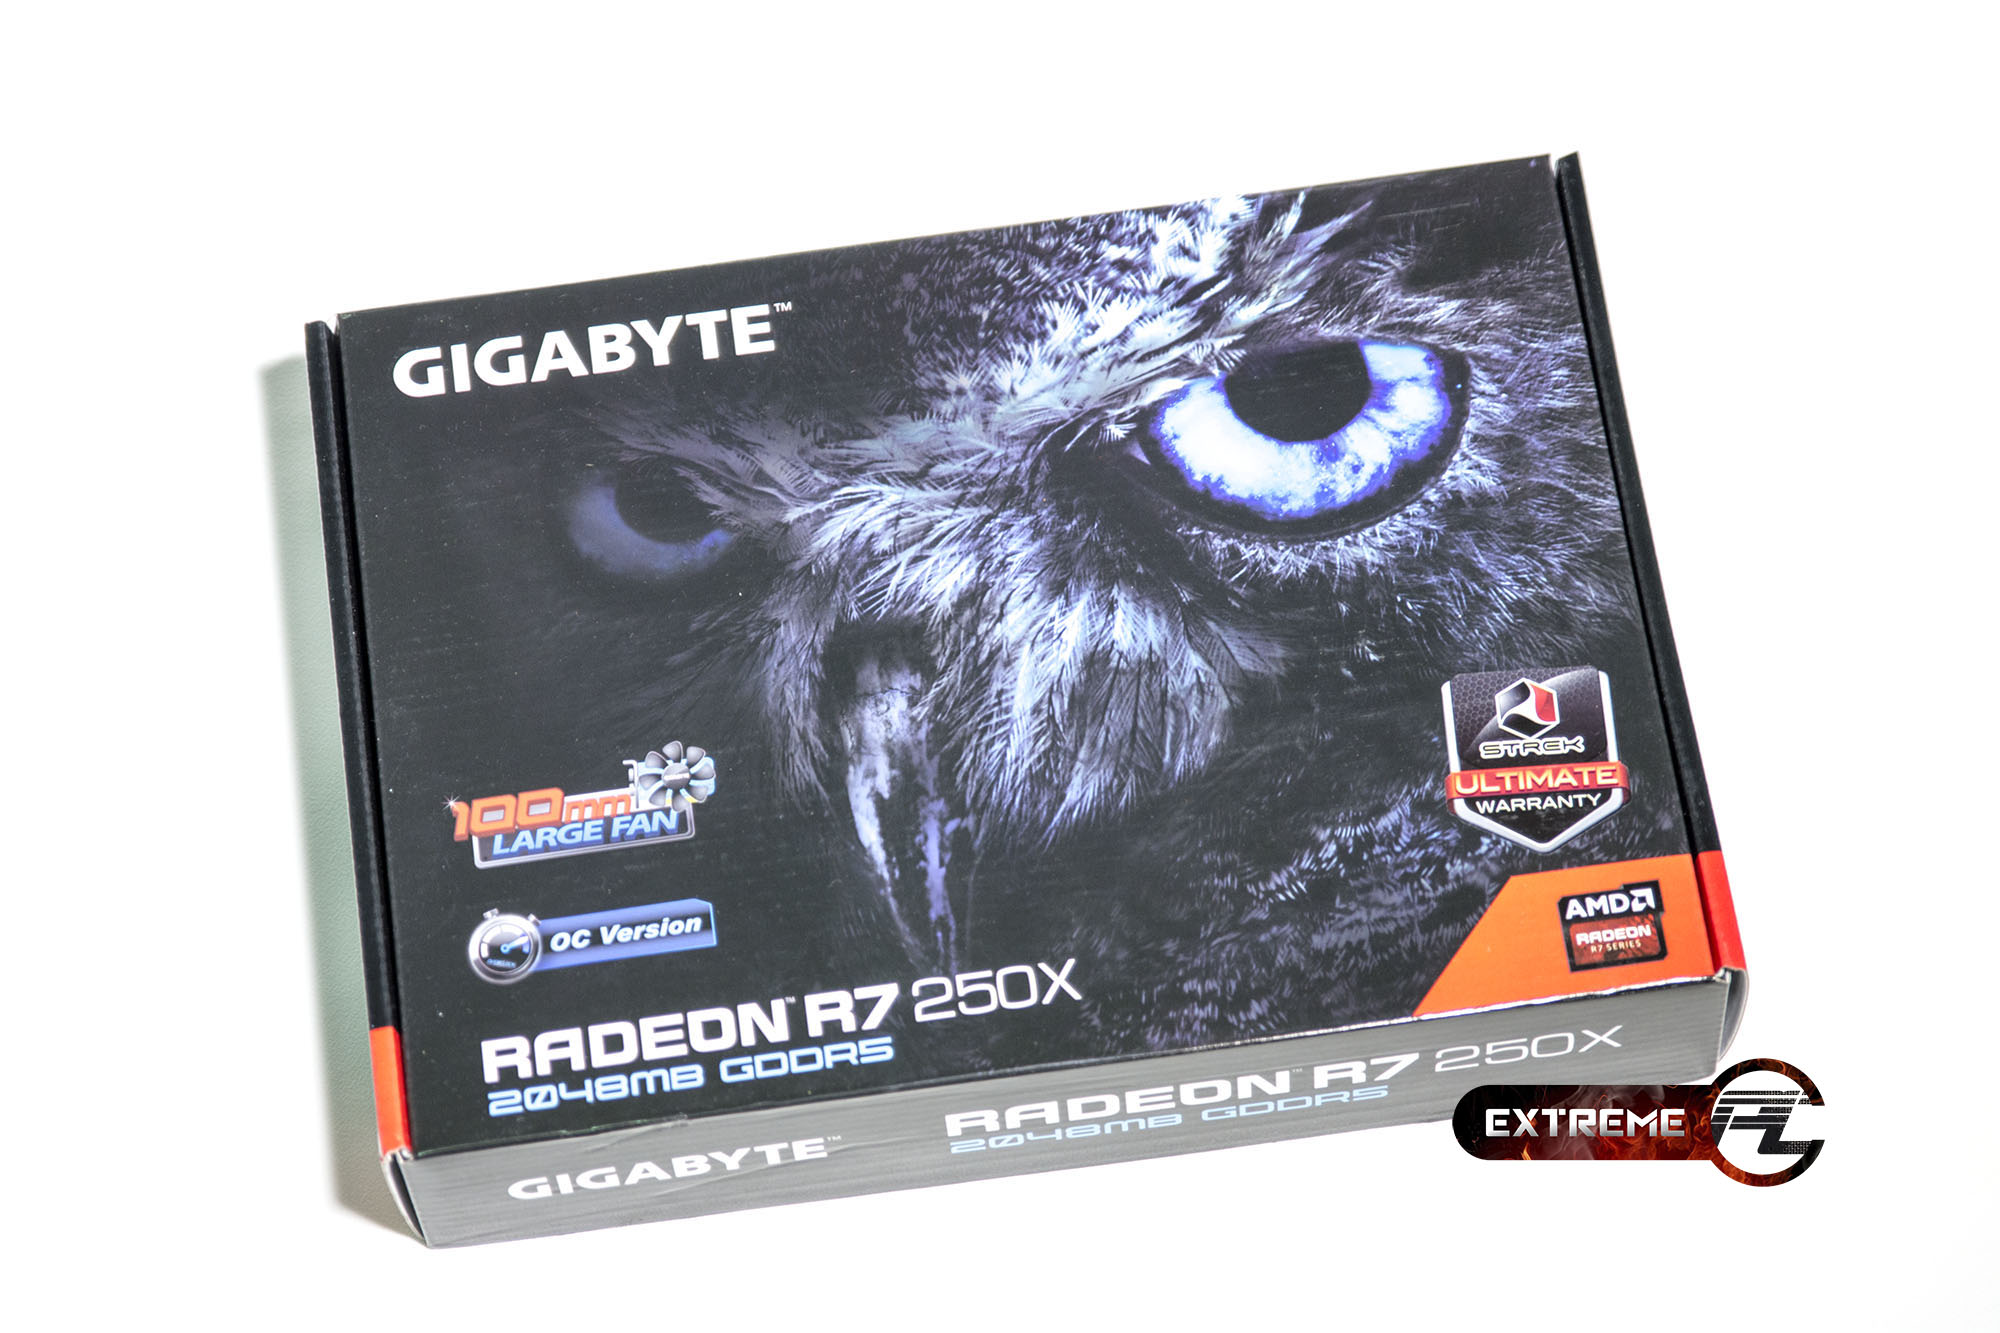 Review: Gigabyte R7 250X คุ้มค่าคุ้มราคา